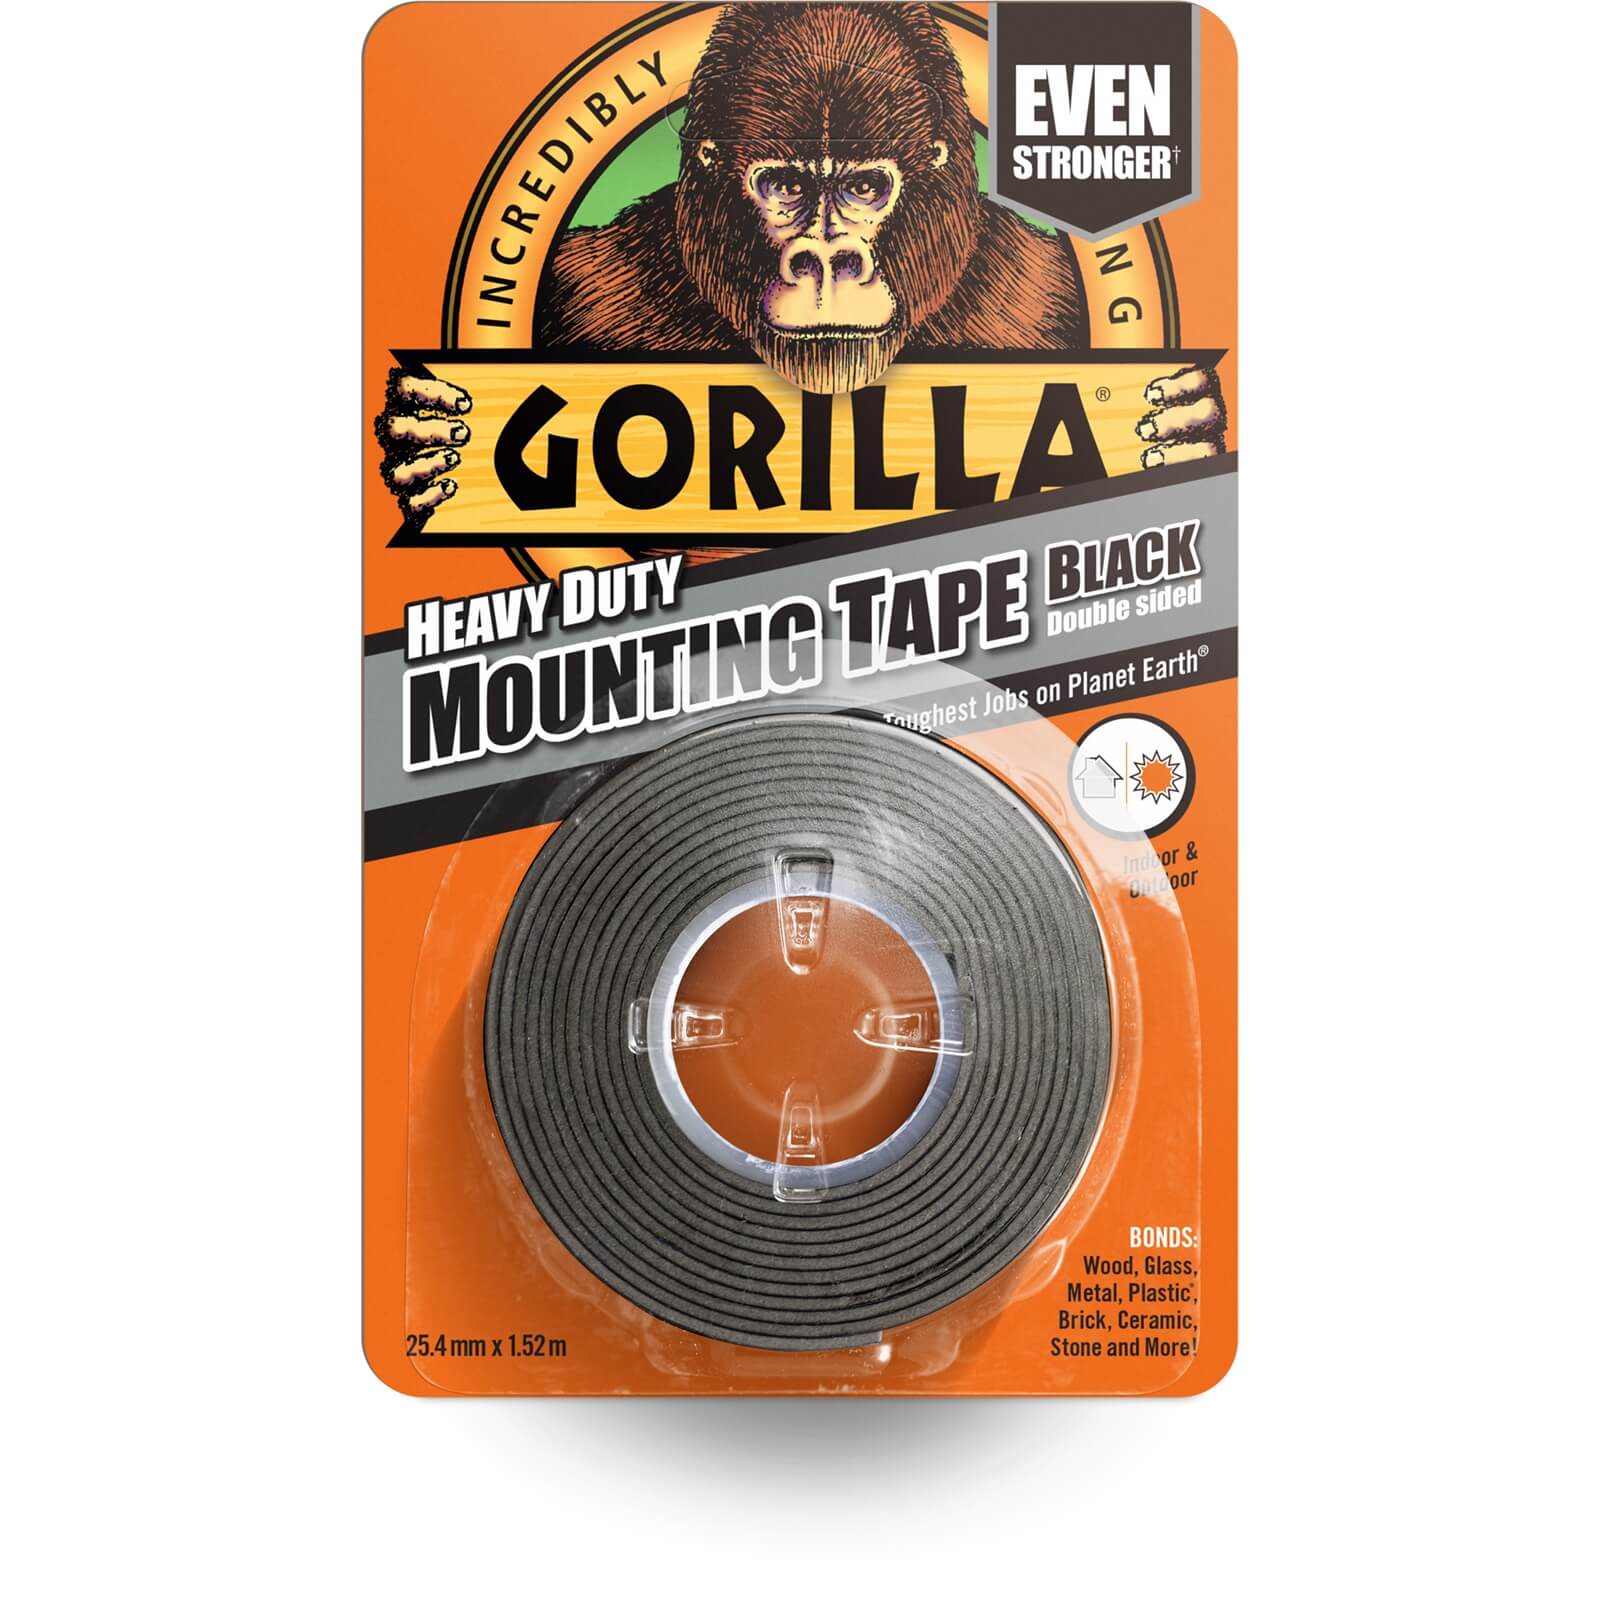 Gorilla Heavy Duty Mounting Tape Black - 1.5m